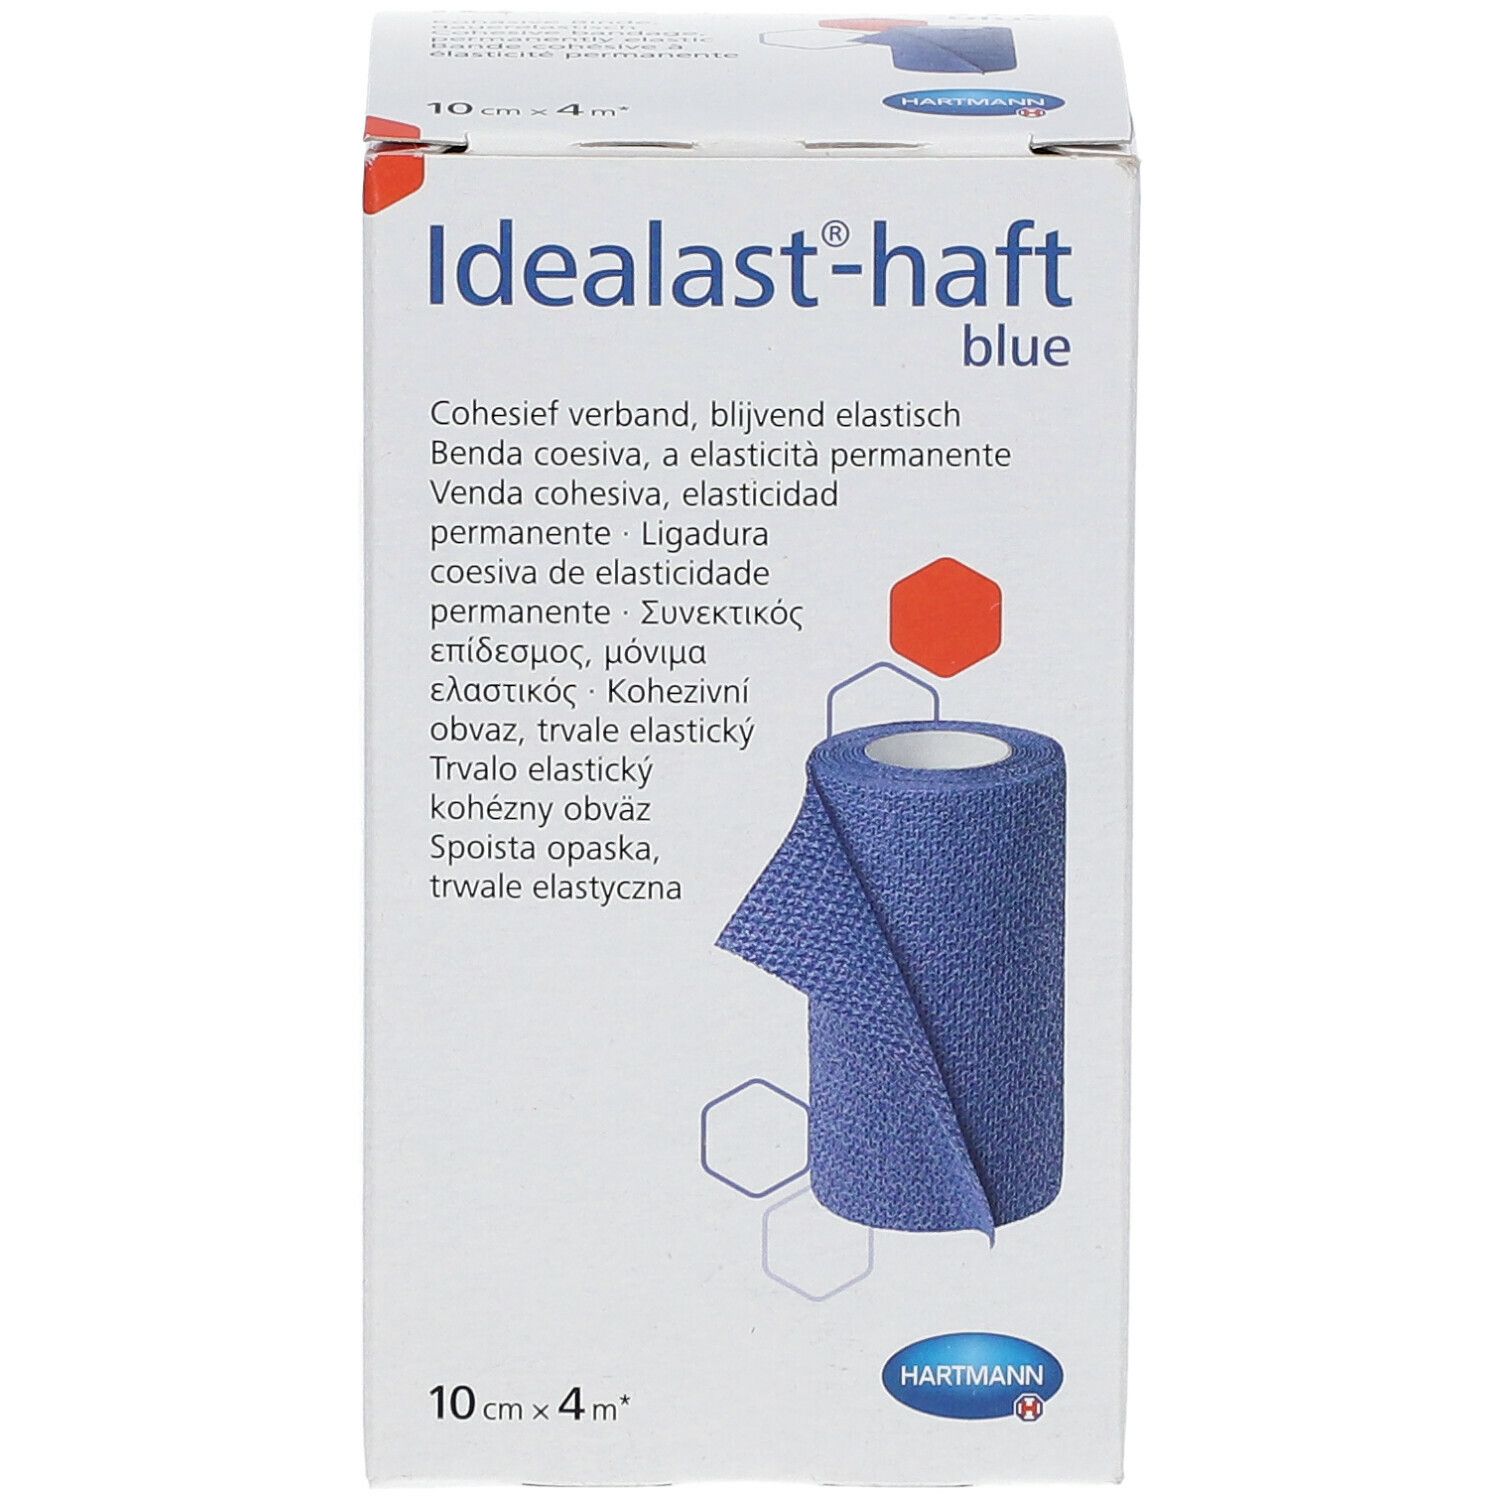 Idealast®-haft Color Binde 10cm x 4 m blau